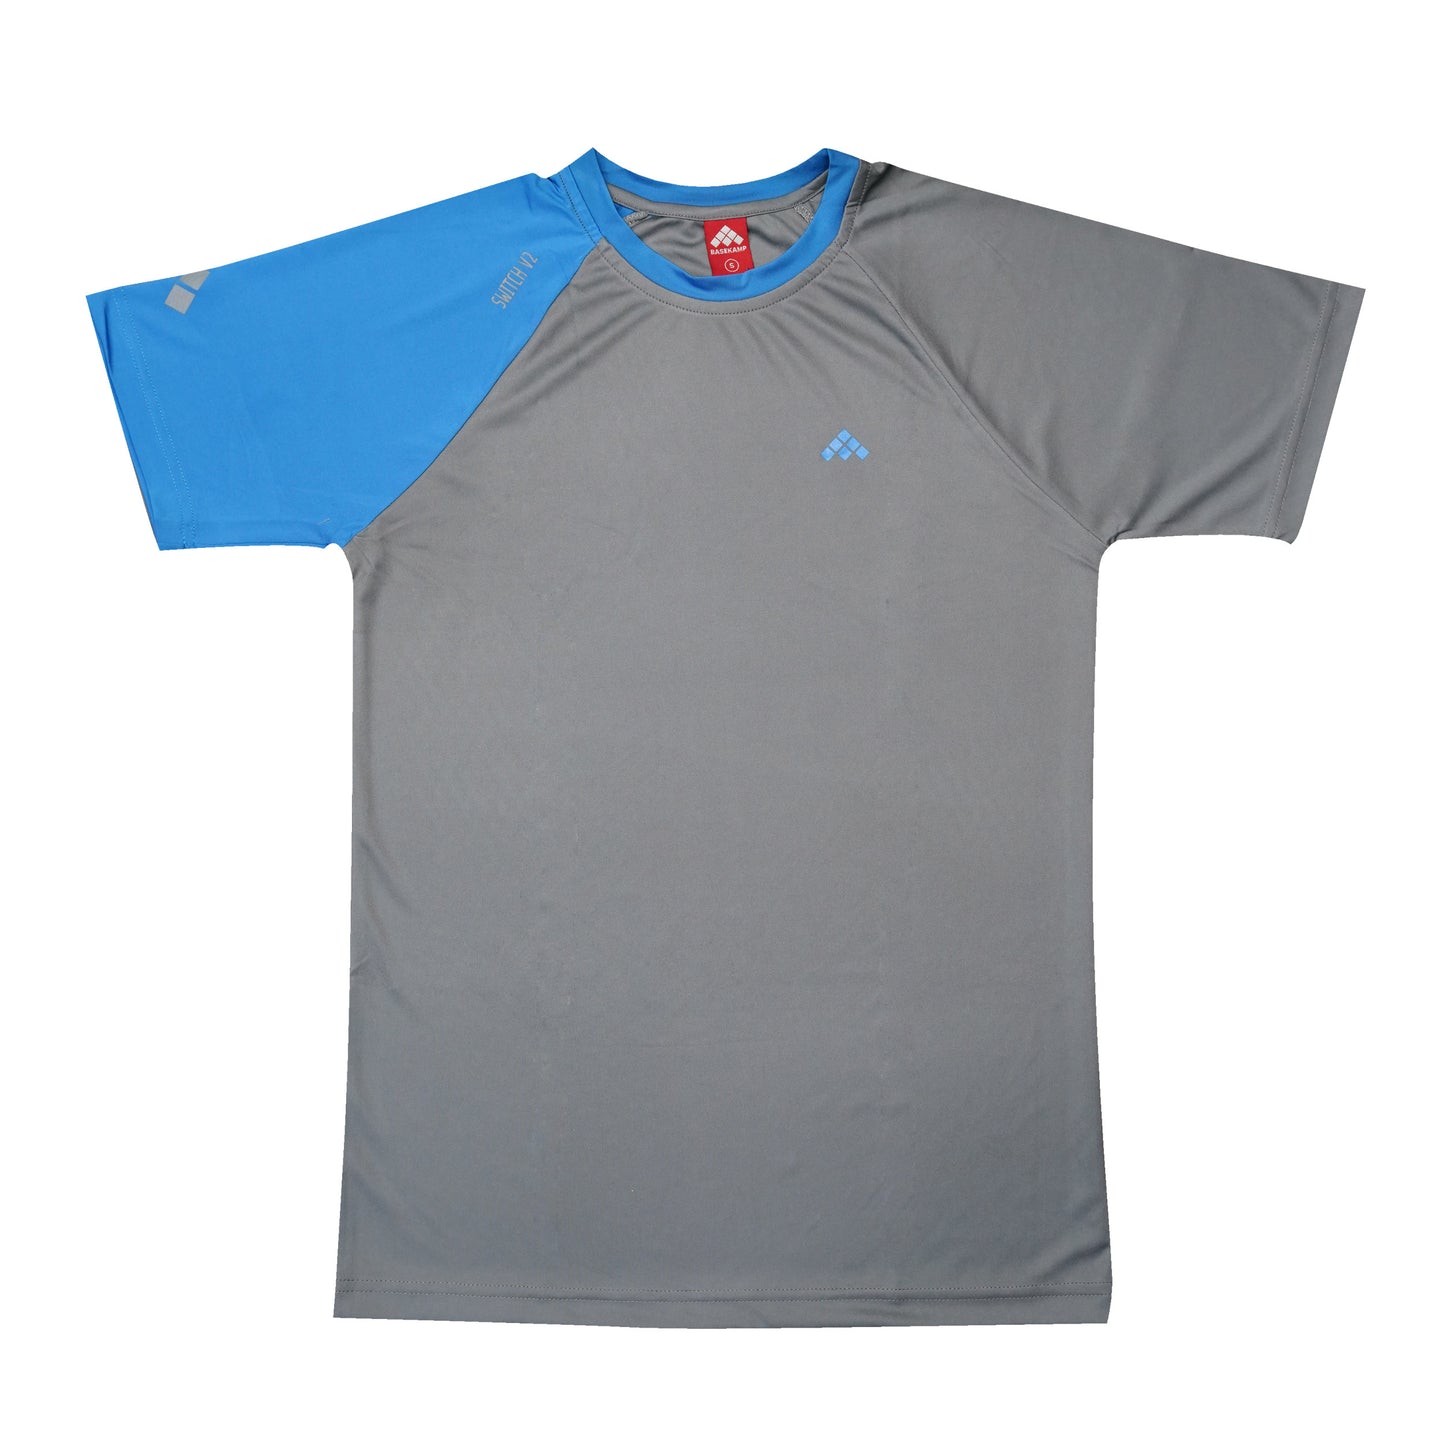 Basekamp Switch v2 Tech Shirt